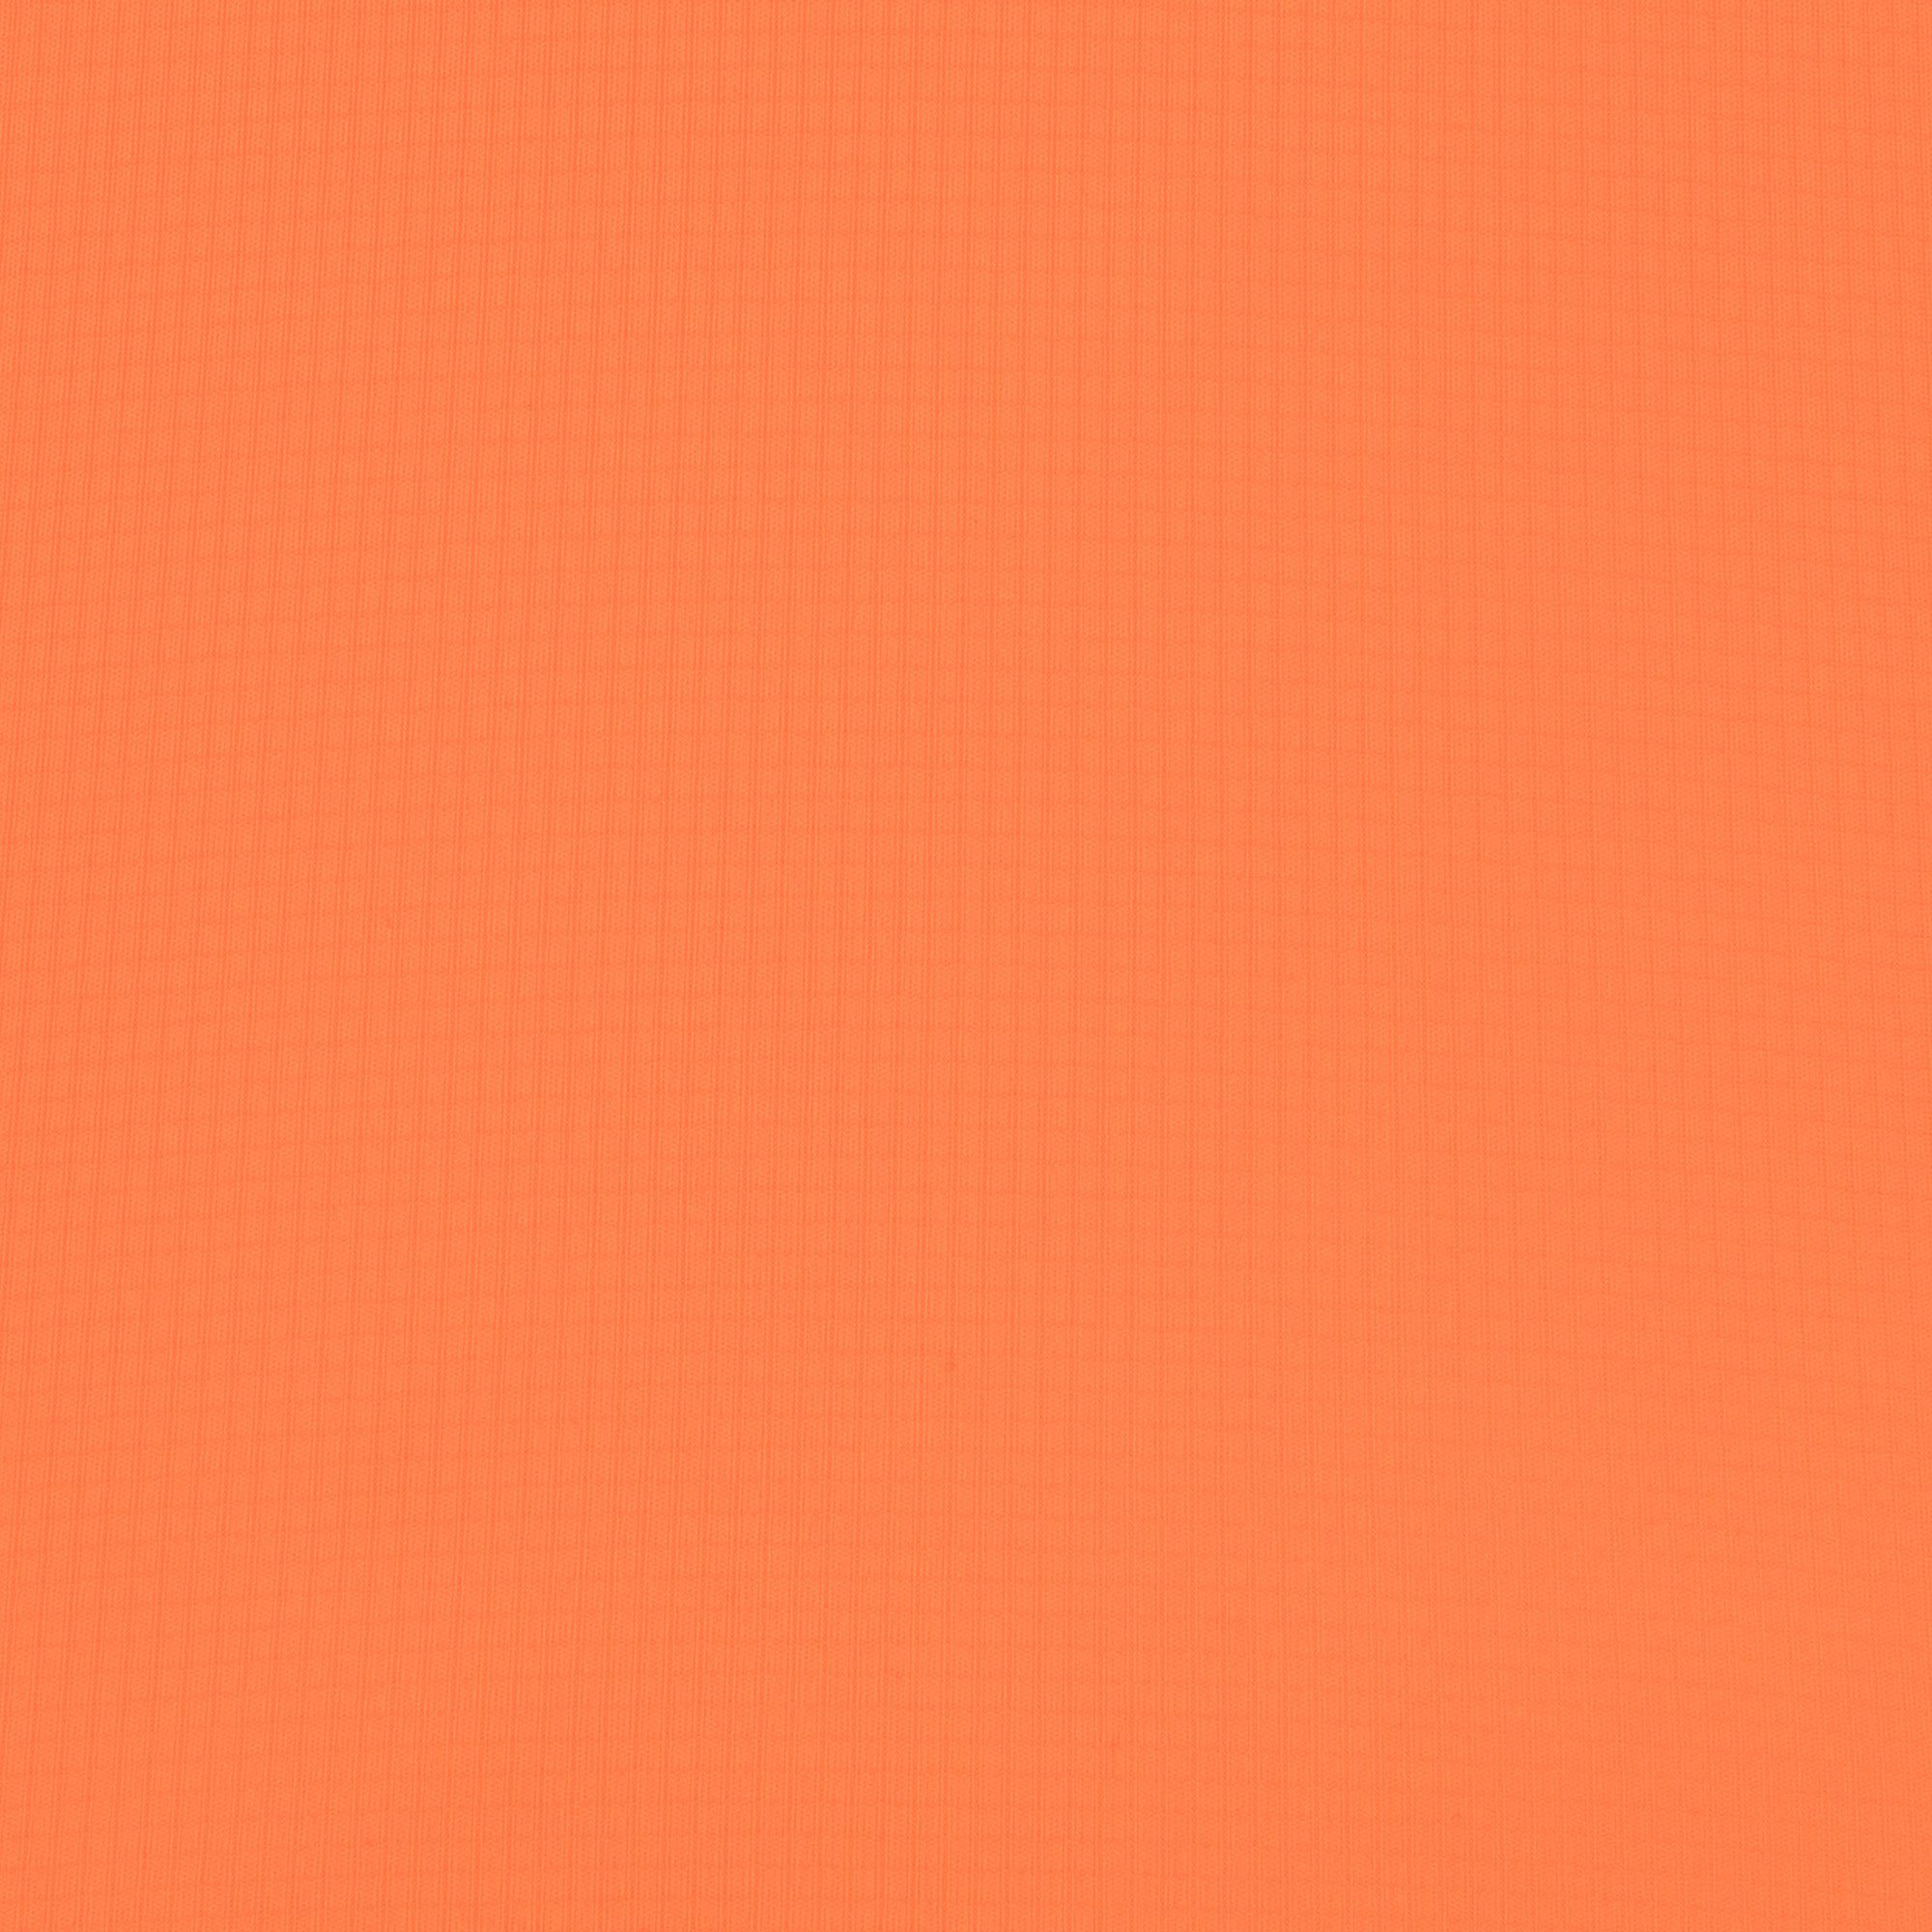 Airtracks Laufshirt Herren Laufshirt Orange & XXL XL Funktionsshirt S < Funktion Tragekomfort L Kurzarm Line mit Dry Quick XXXL M > optimalem Comfort Atmungsaktiv